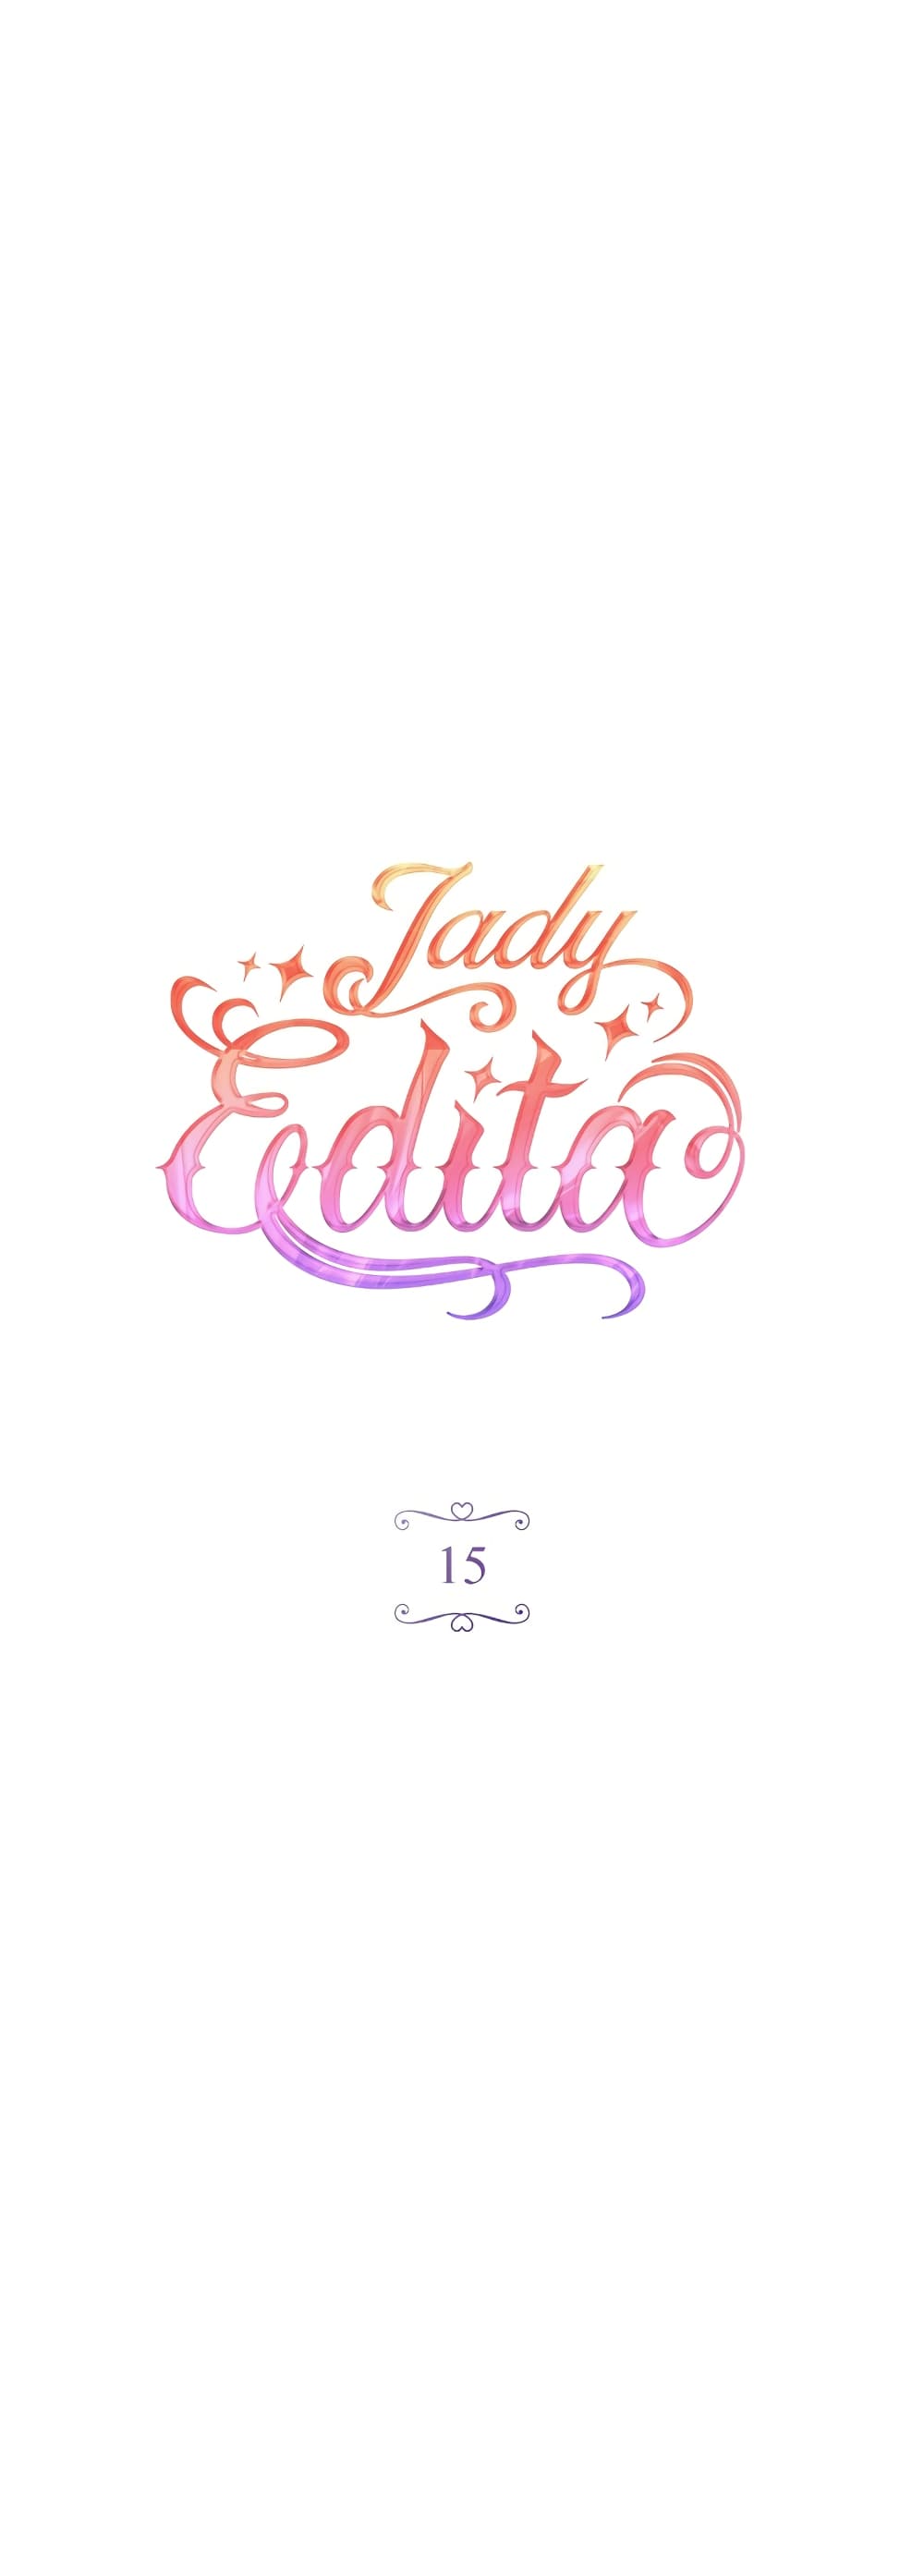 Lady Edita 15 13